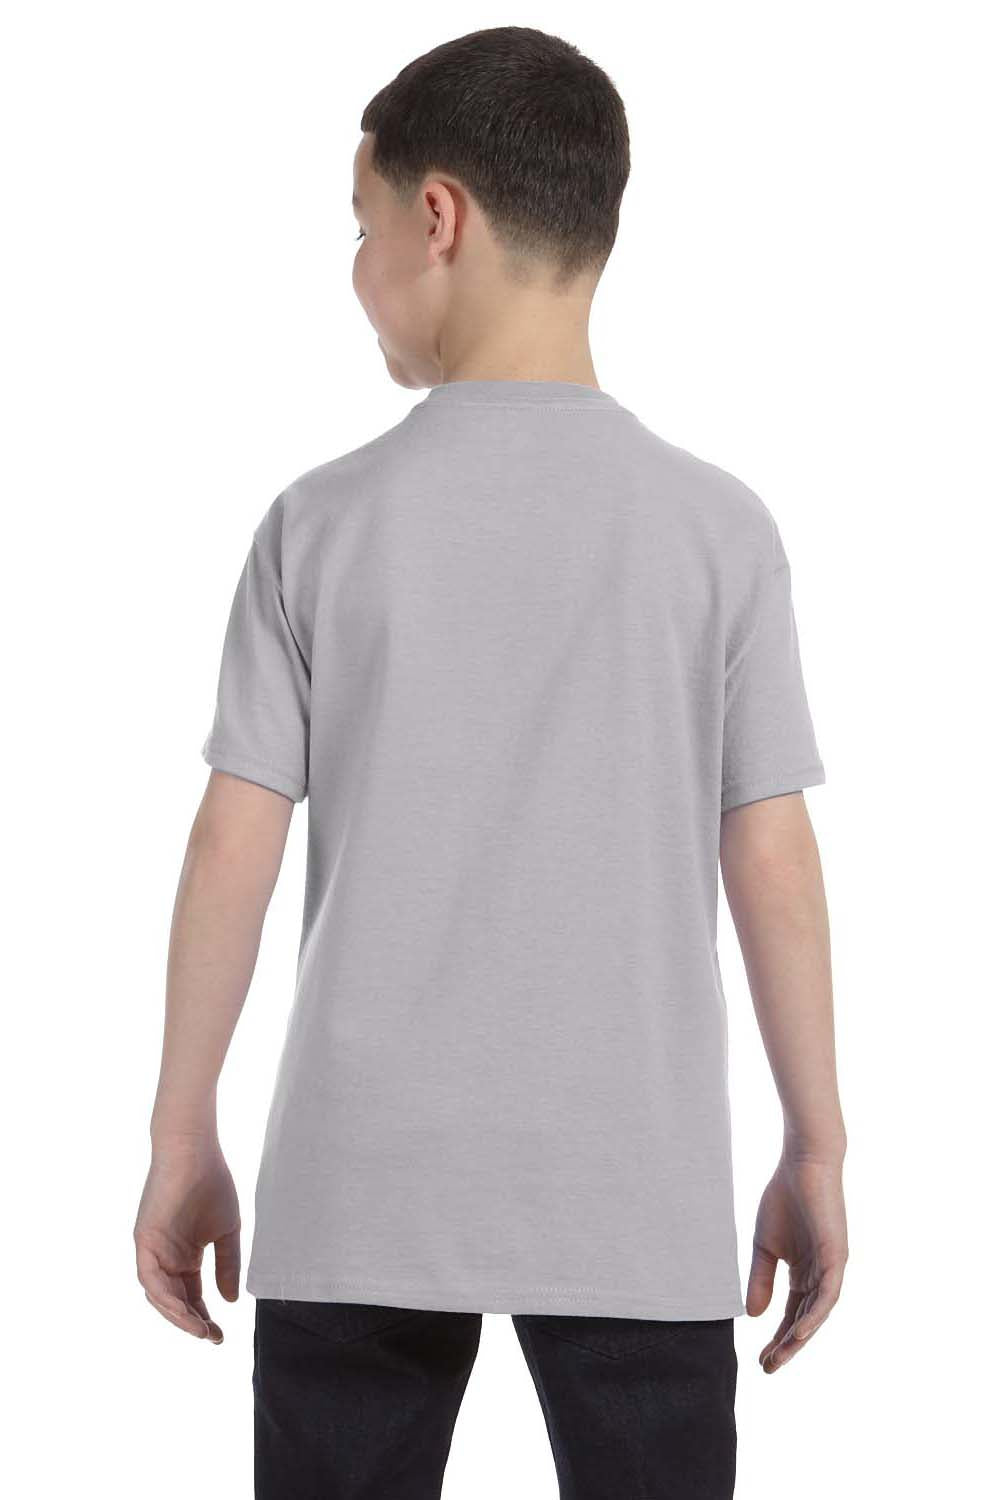 Jerzees 29B Youth Dri-Power Moisture Wicking Short Sleeve Crewneck T-Shirt Silver Grey Back